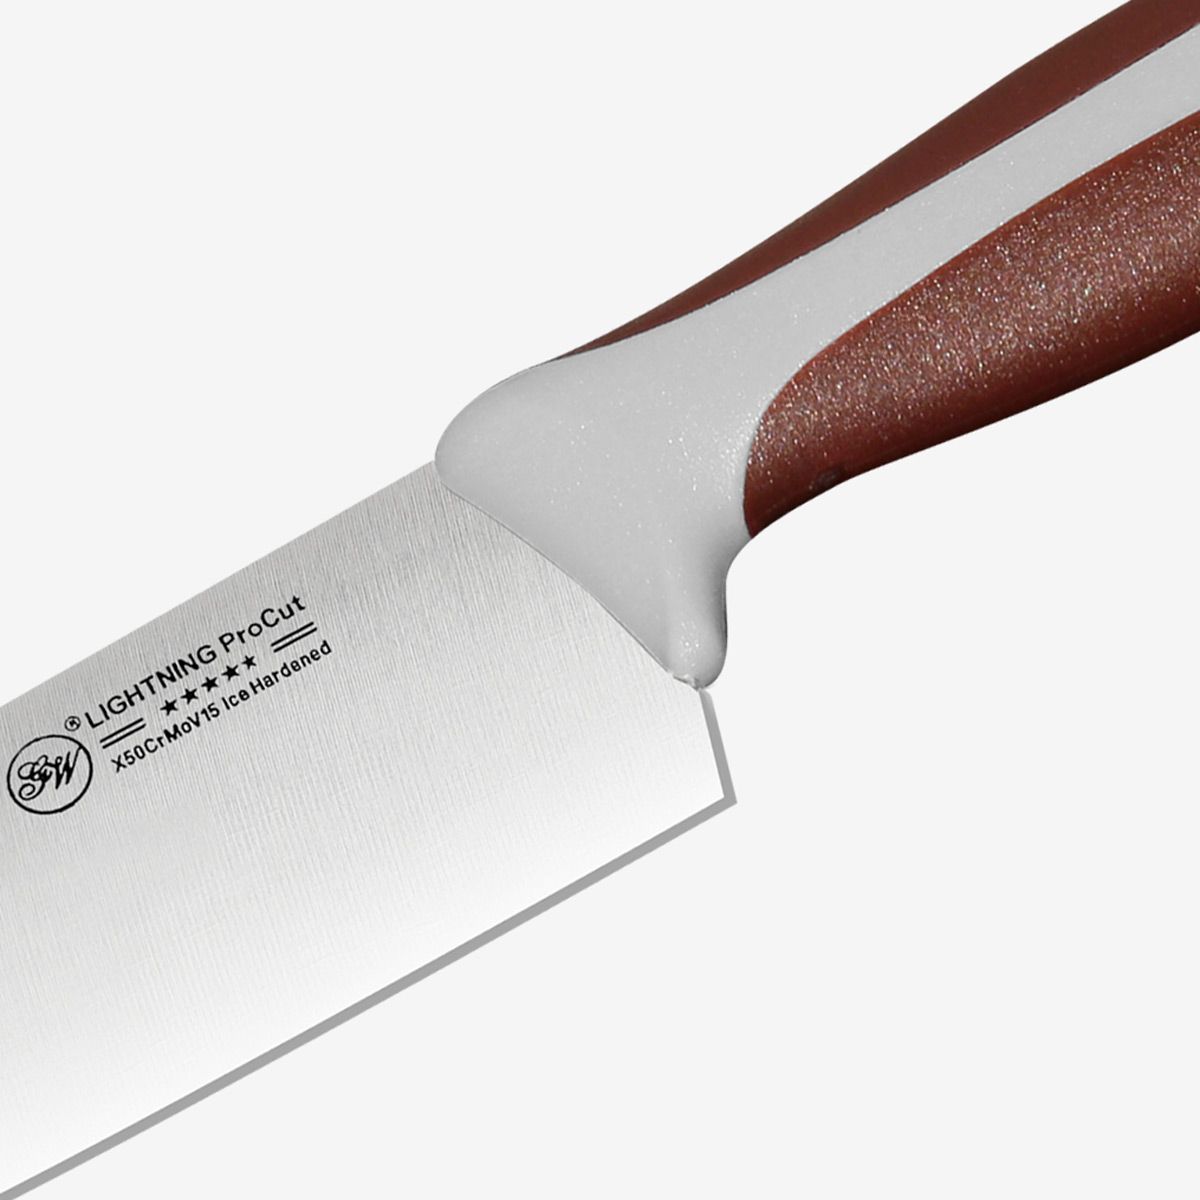 Gunter Wilhelm Thunder Chef Knife, 10 Inch | Brown and Grey ABS Handle SKU: 10-105-0110